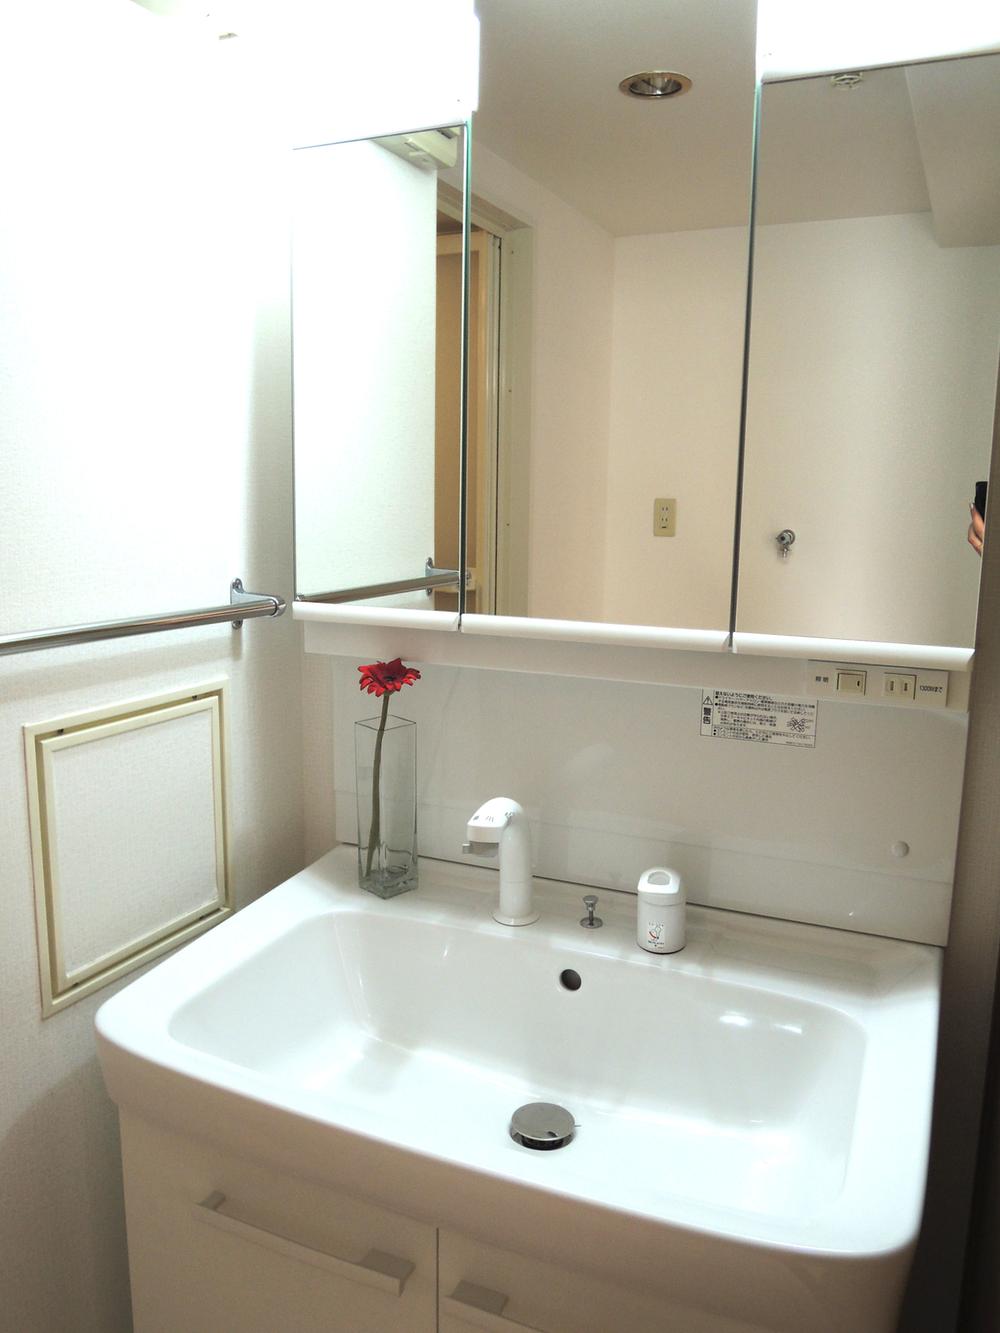 Wash basin, toilet. Vanity of hand shower type